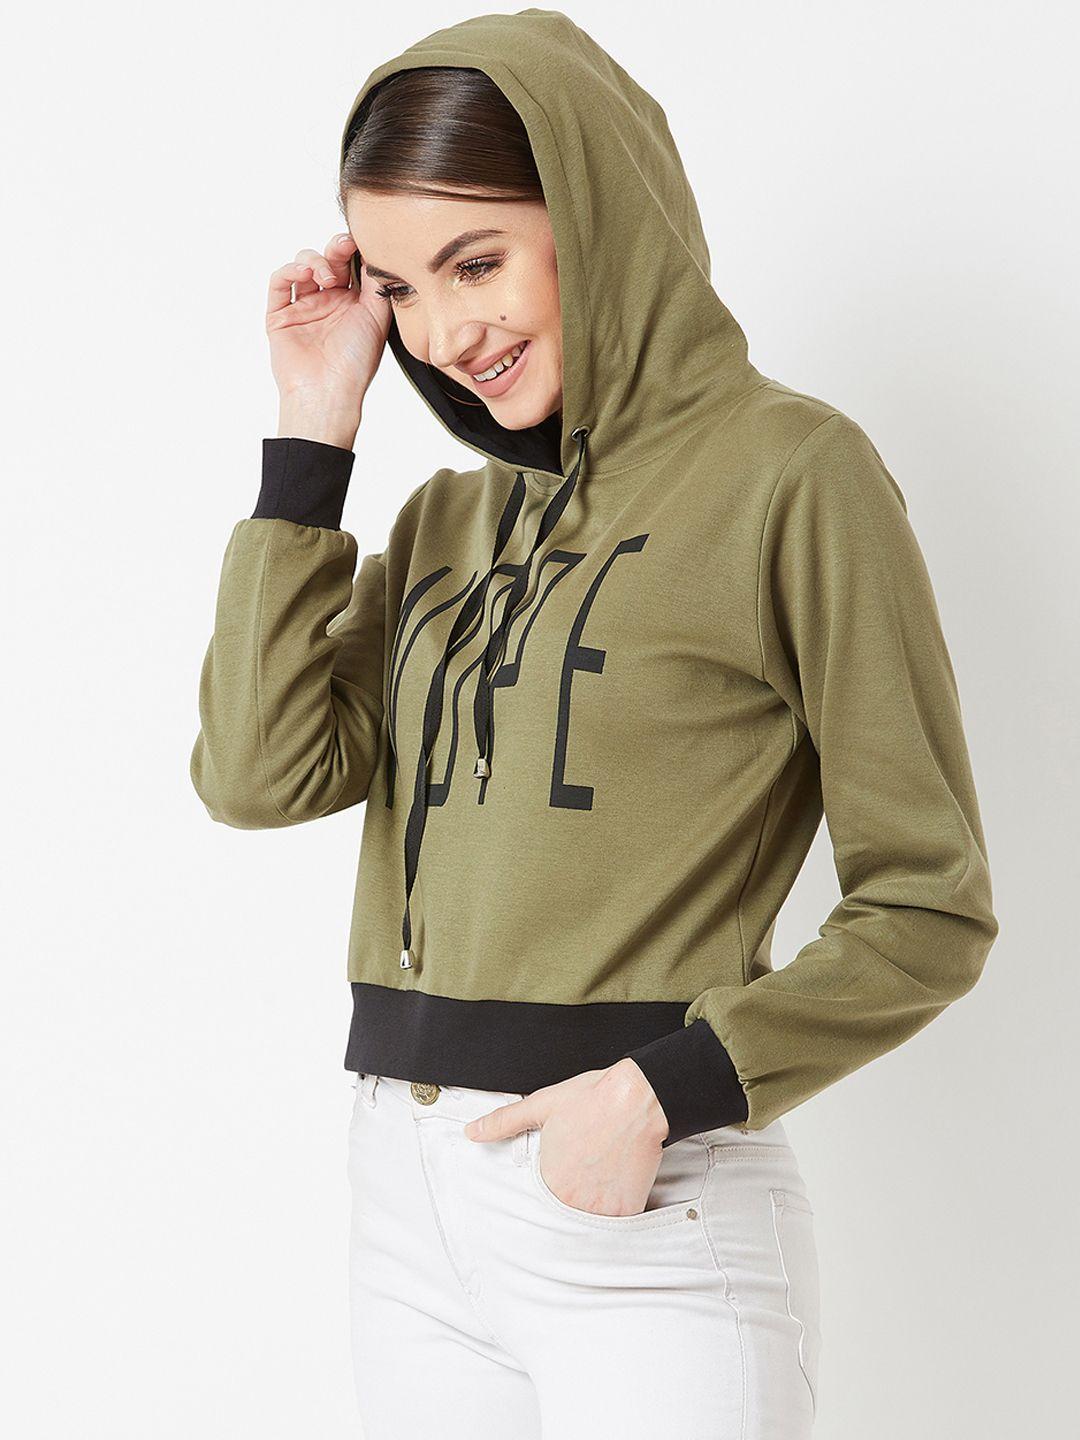 miss-chase-women-olive-green-printed-hooded-sweatshirt